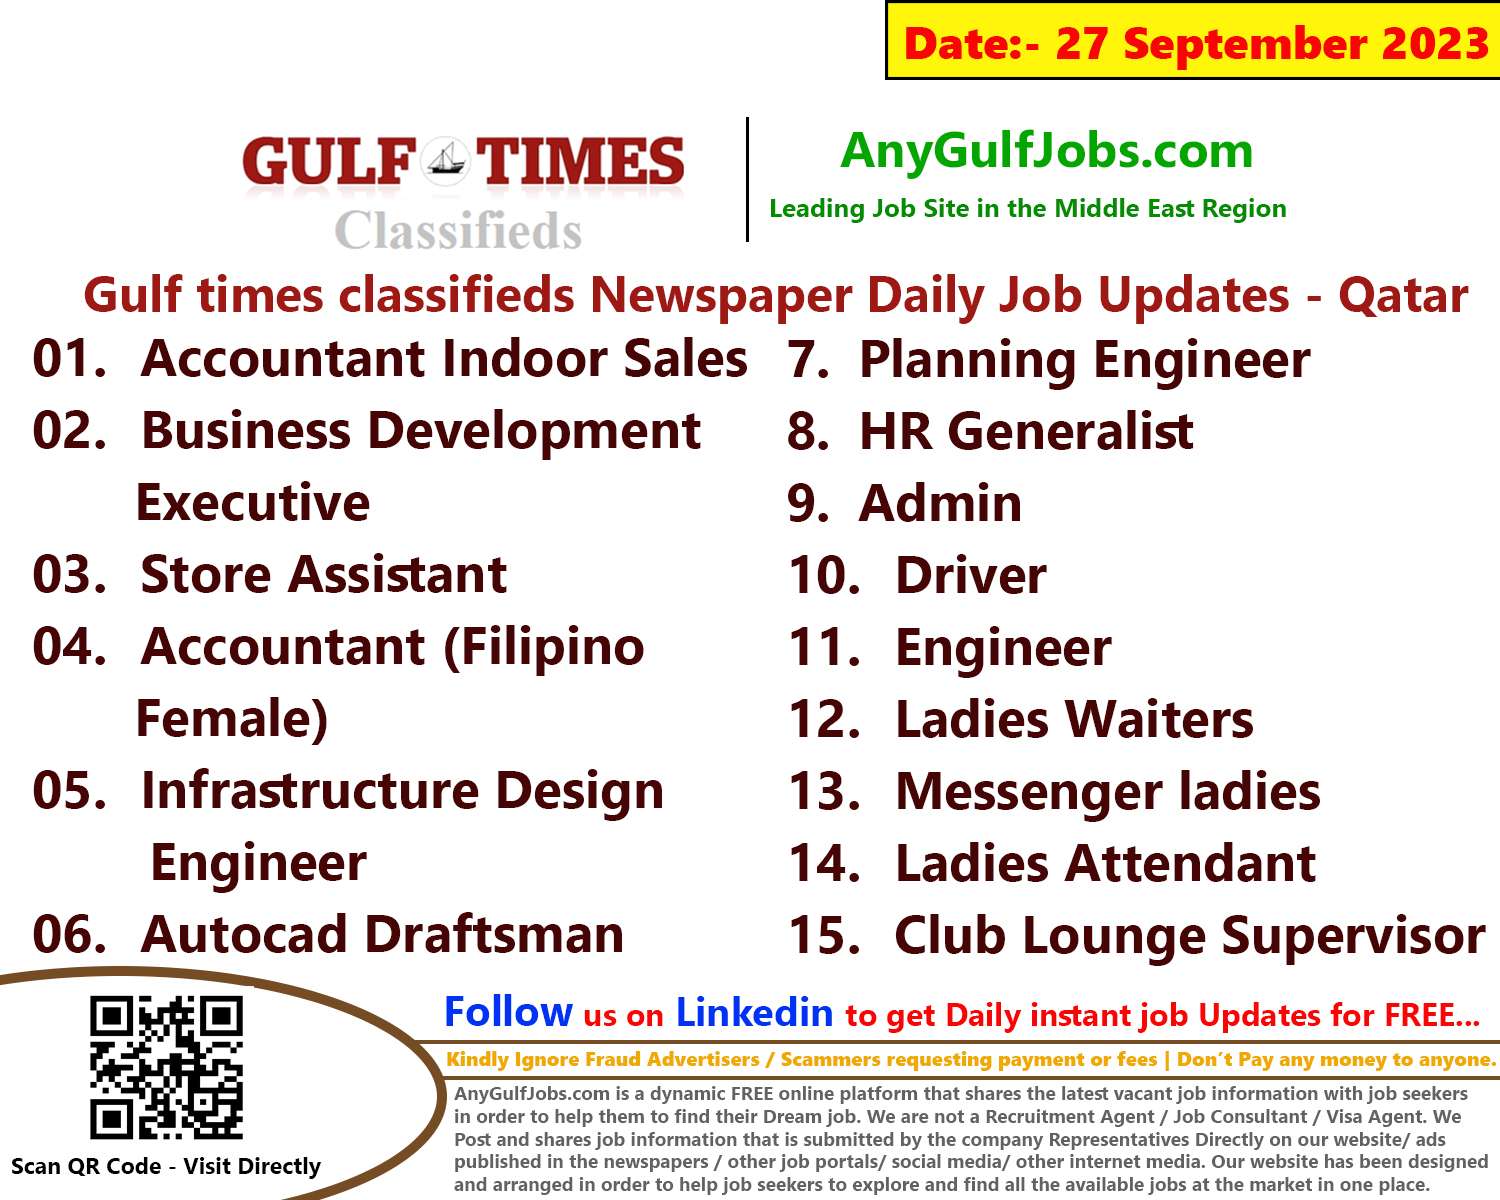 Gulf times classifieds Job Vacancies Qatar - 27 September 2023